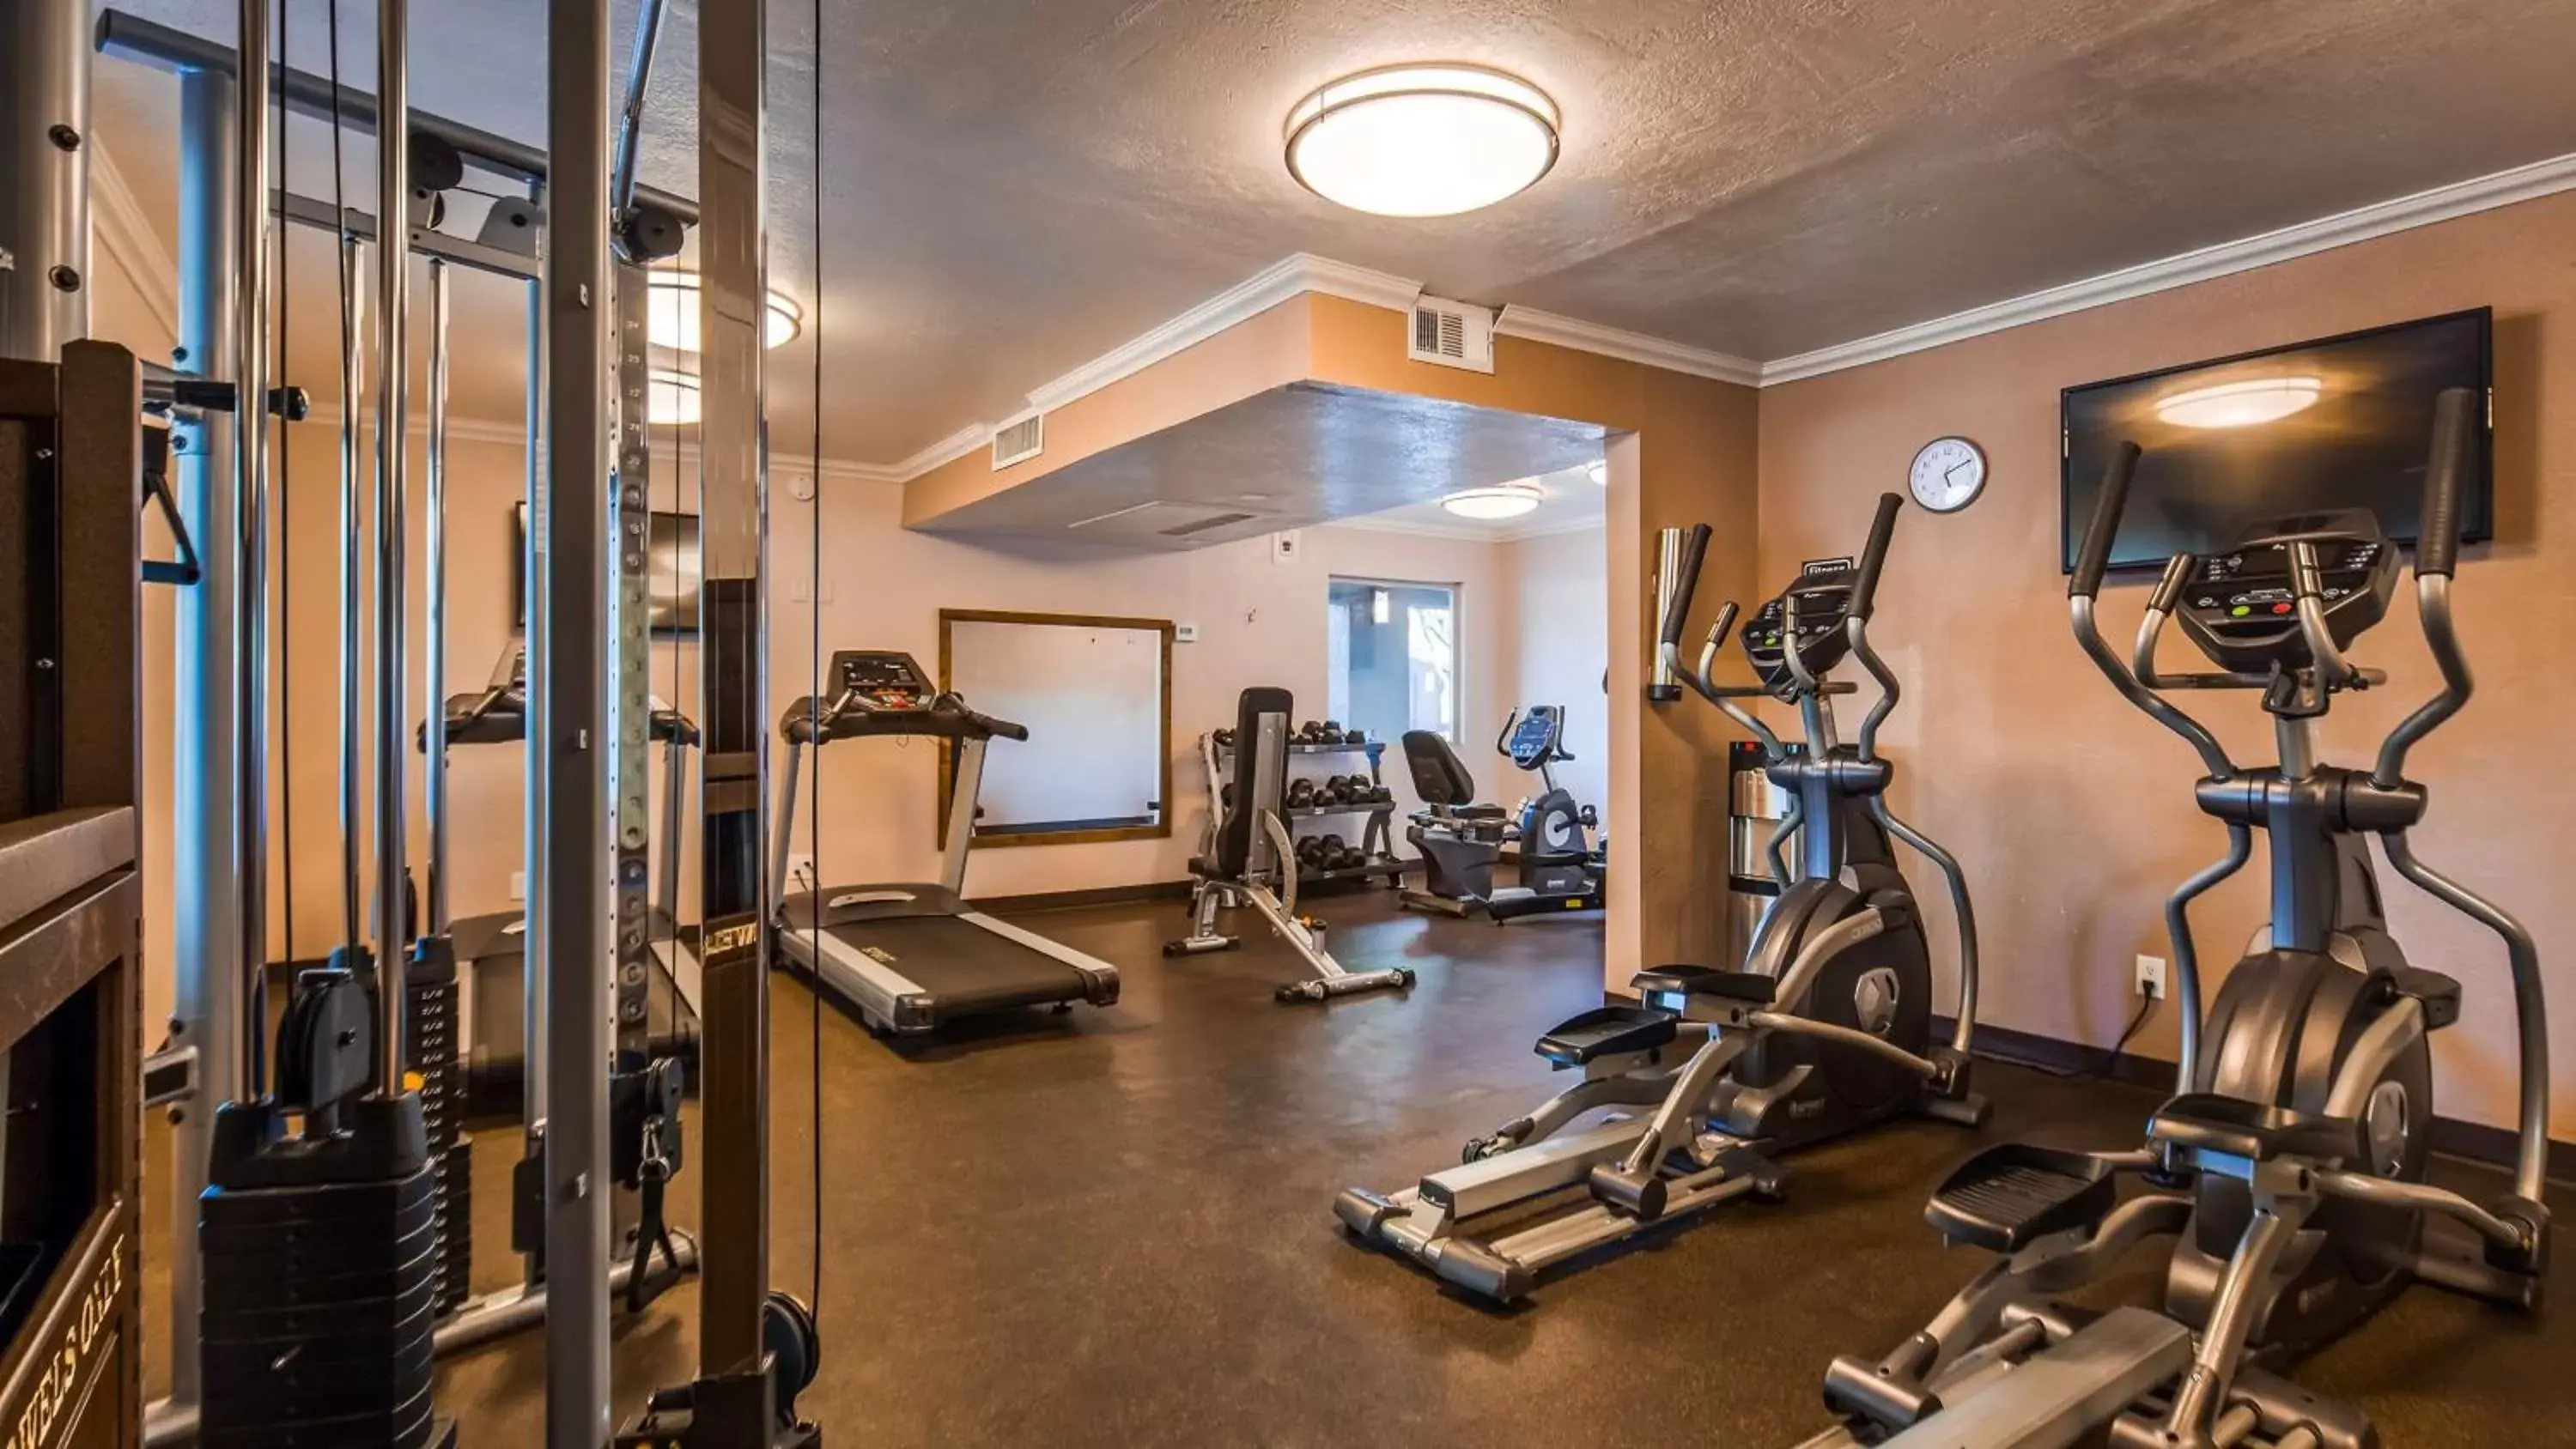 Fitness centre/facilities, Fitness Center/Facilities in Best Western InnSuites Phoenix Hotel & Suites